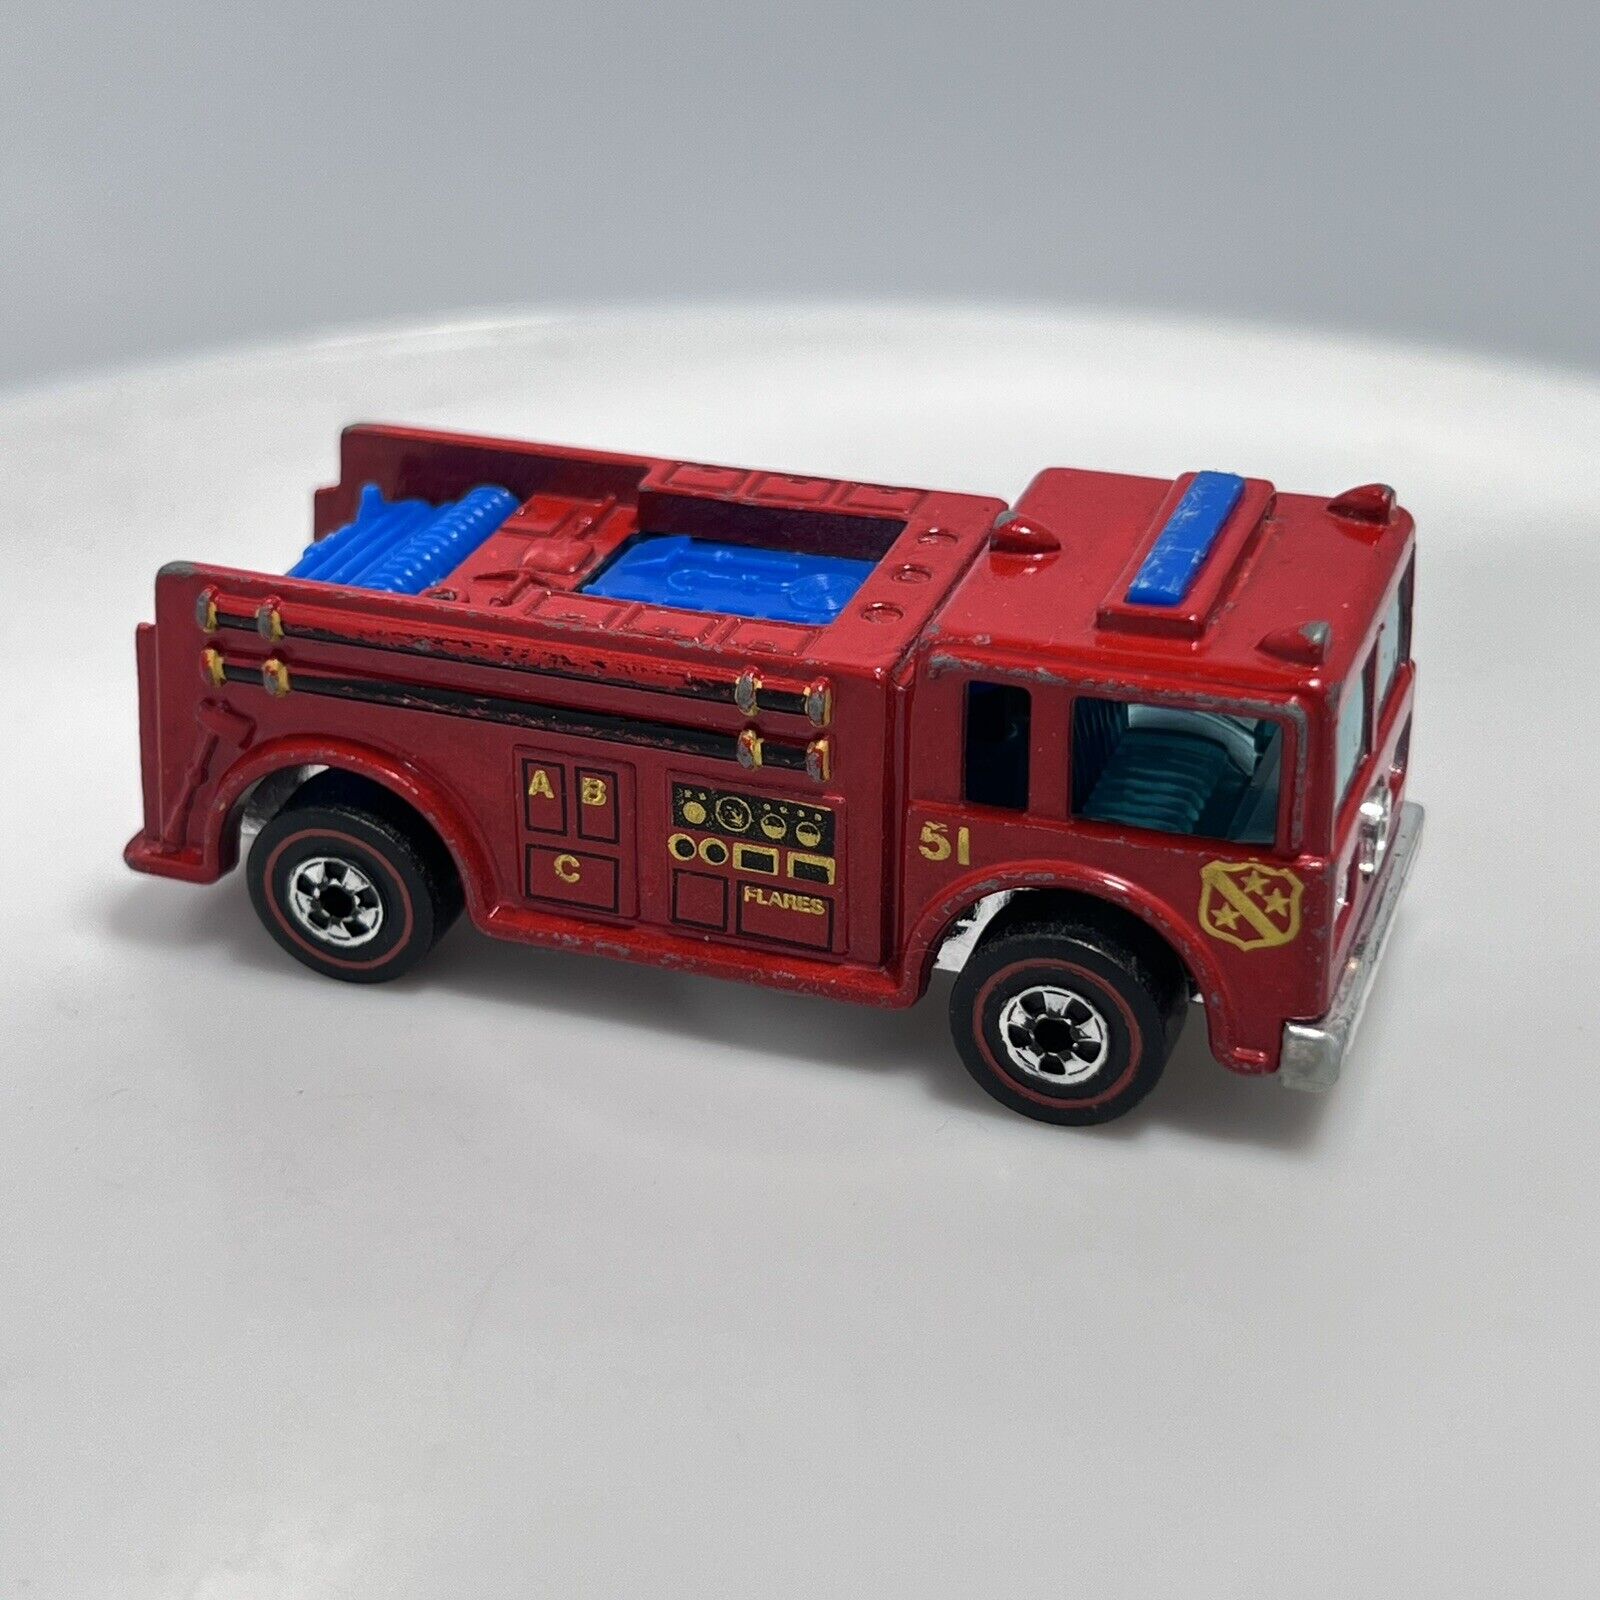 1977 Vintage Hot Wheels FLYING COLORS Redline Fire Eater Red Fire Truck